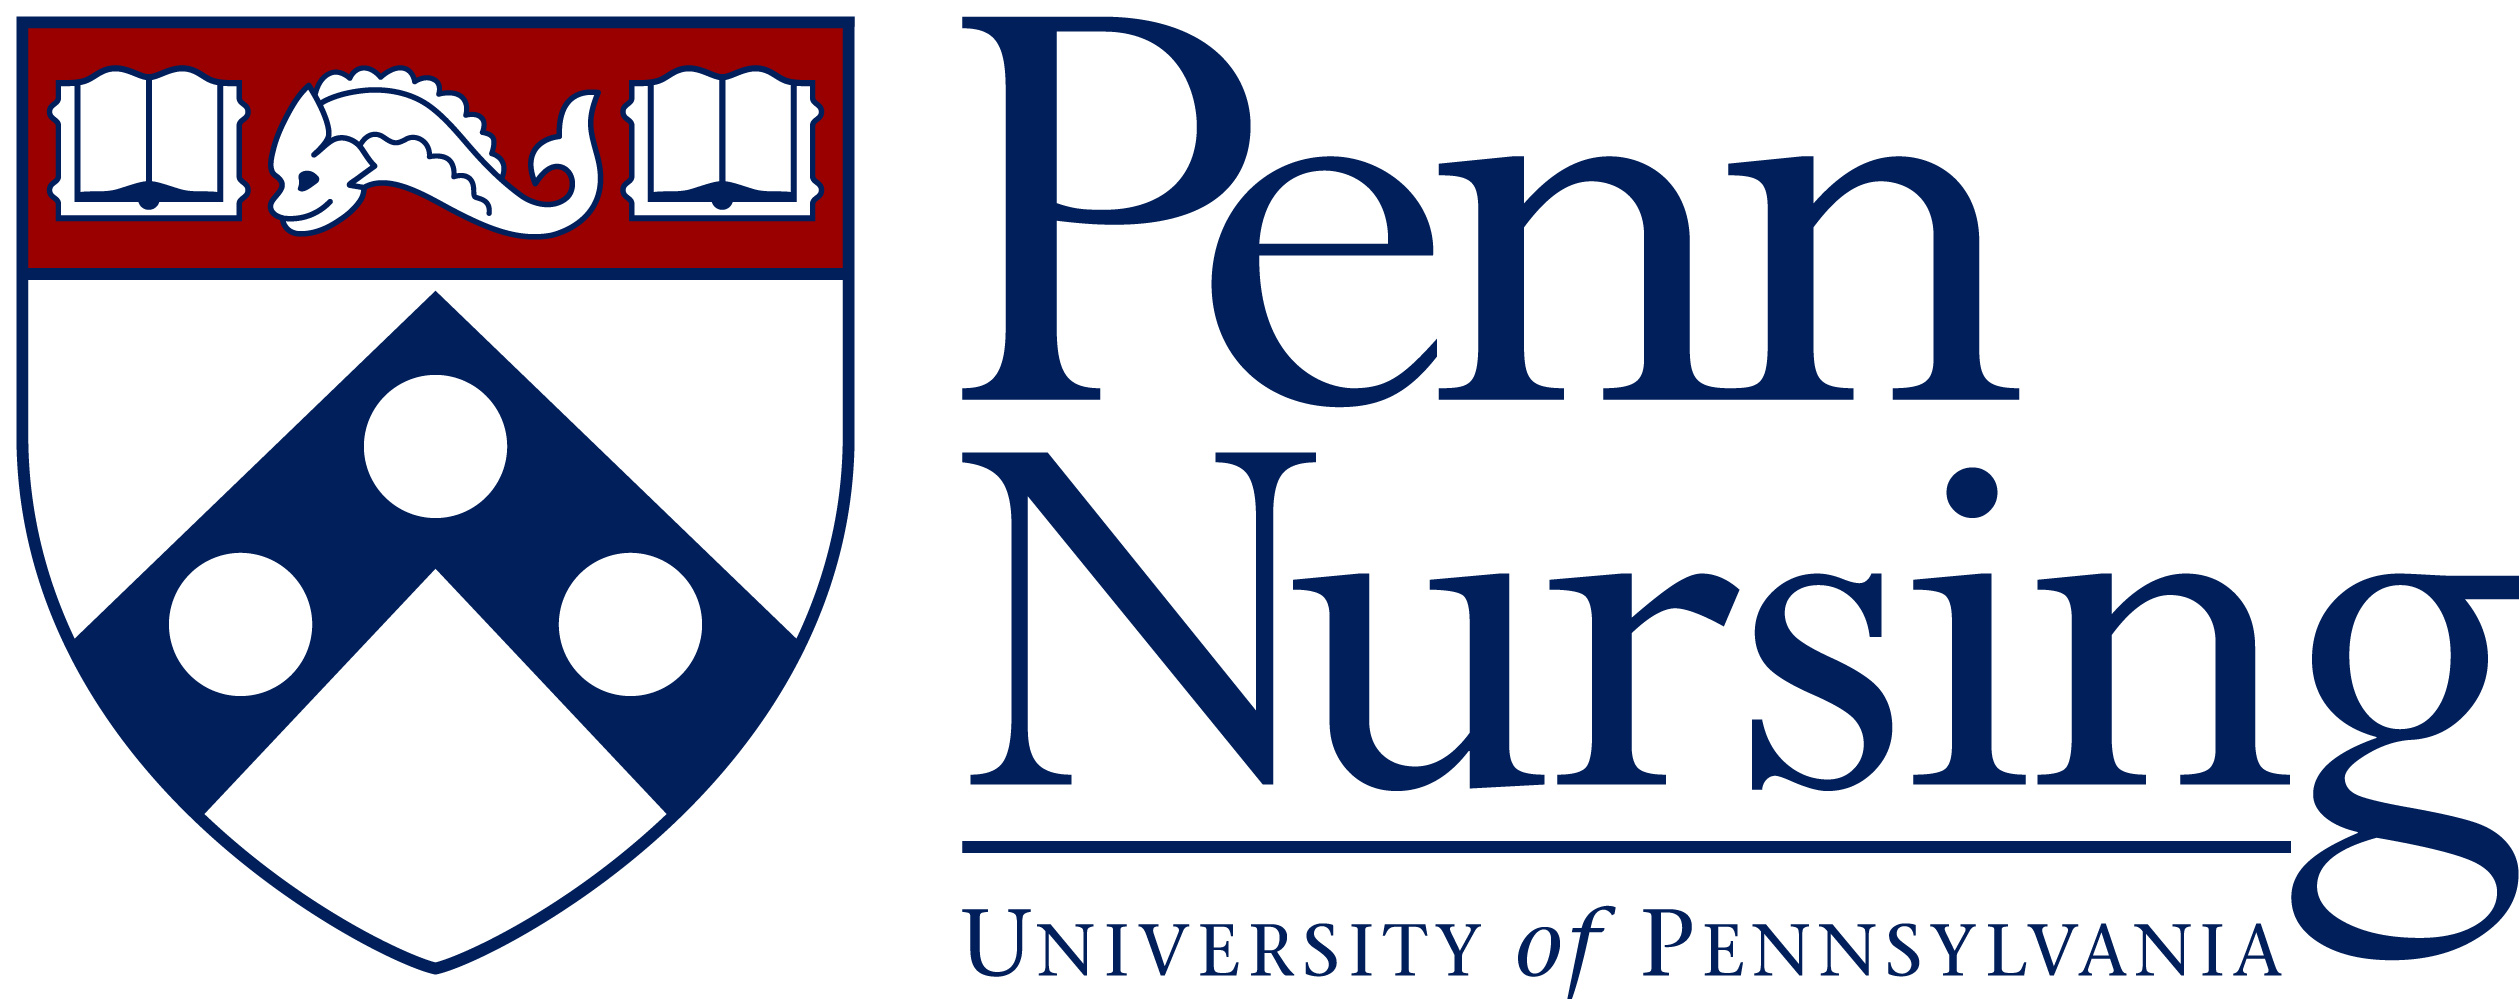 Penn Nursing logo